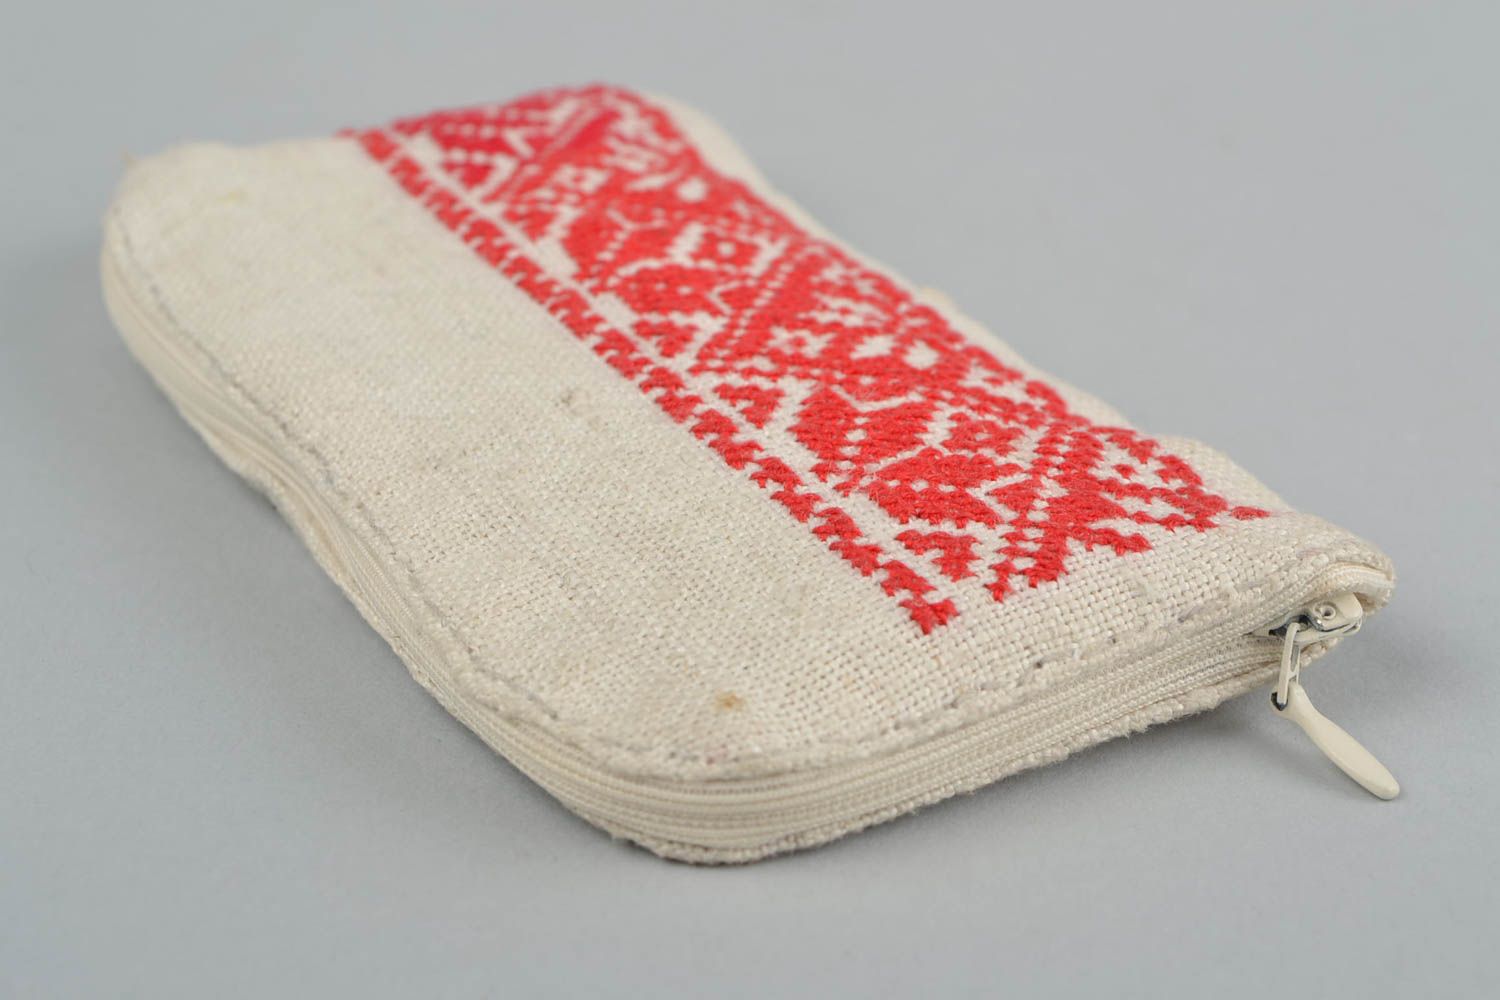 Handmade designer hemp fabric phone case with red cross stitch embroidery photo 1